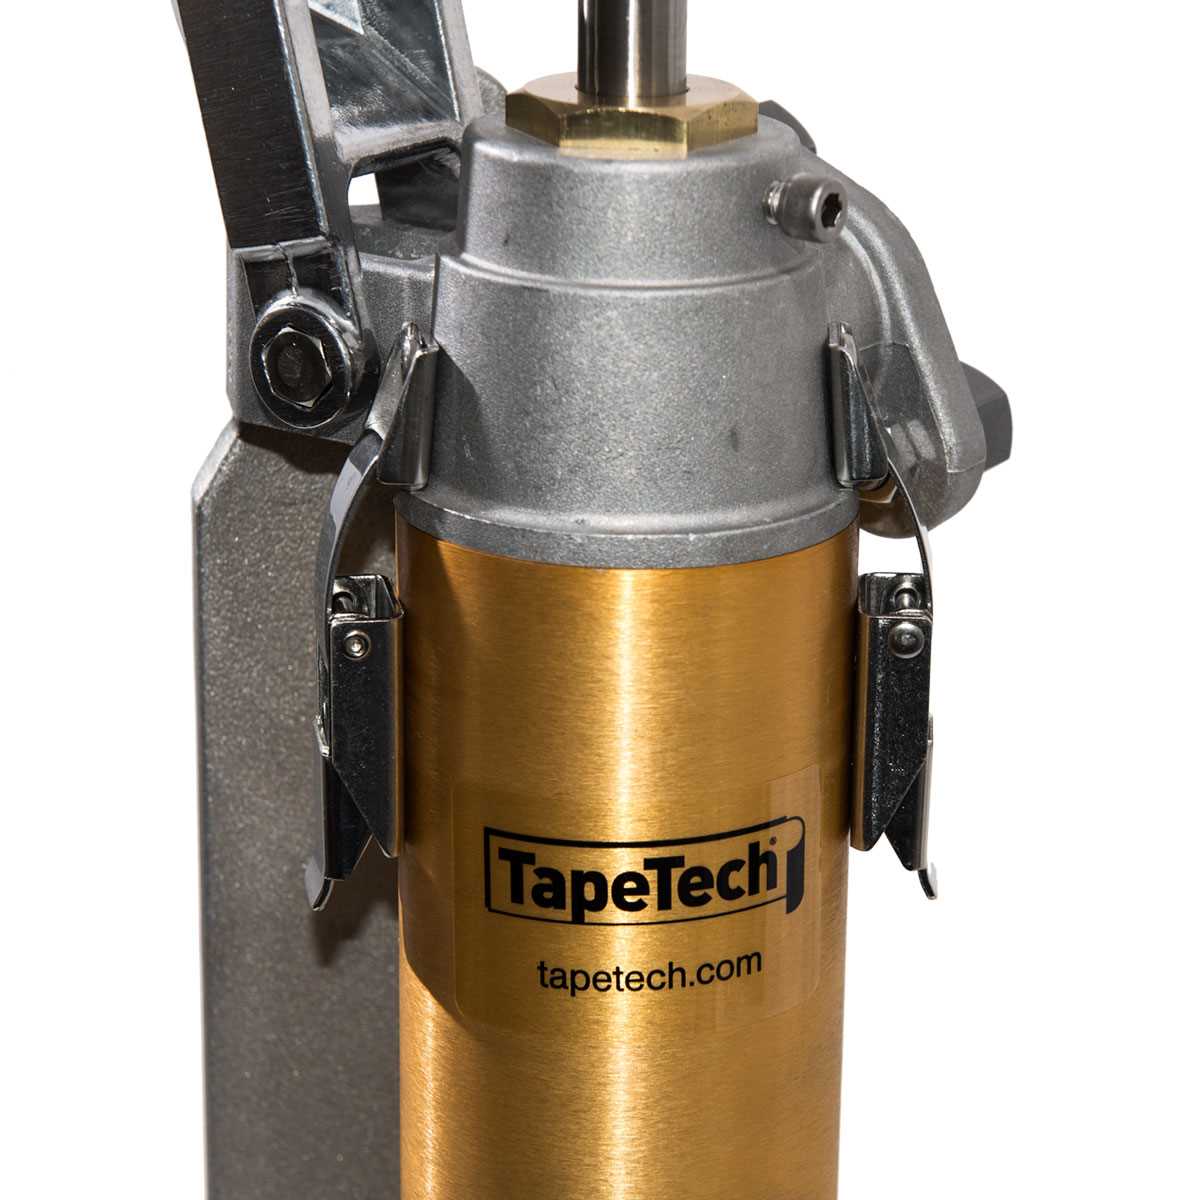 TapeTech EasyClean Loading Pump